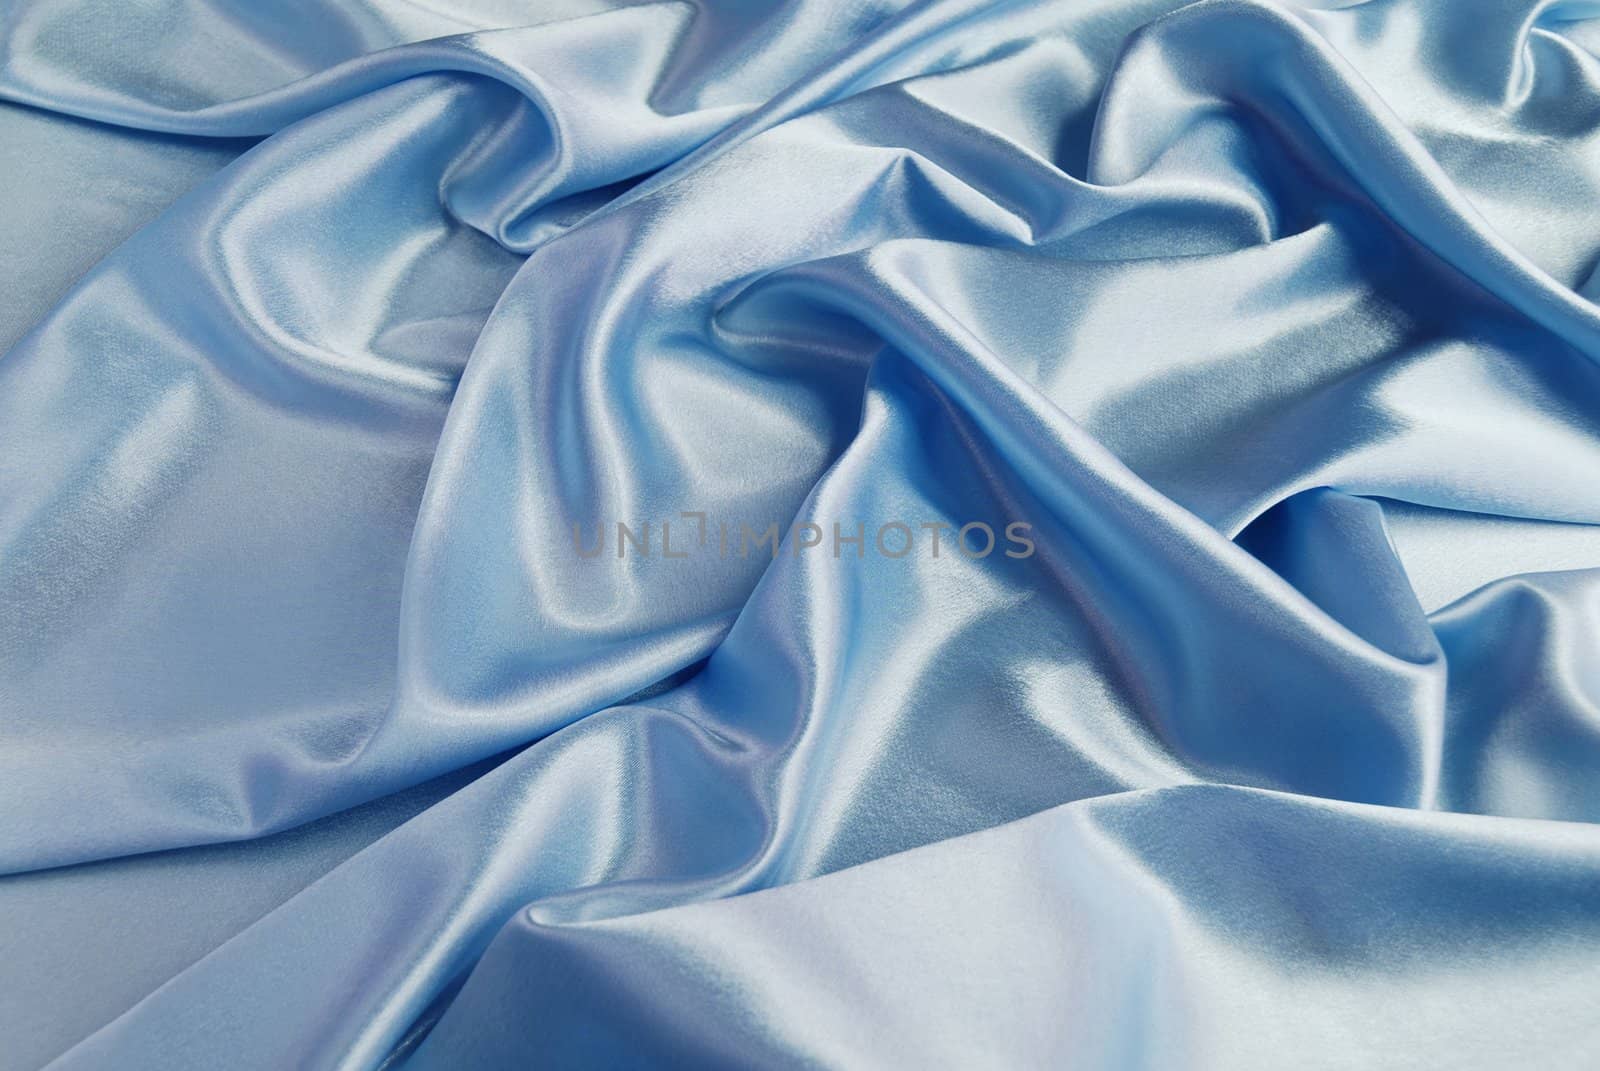 Blue satin with a folds